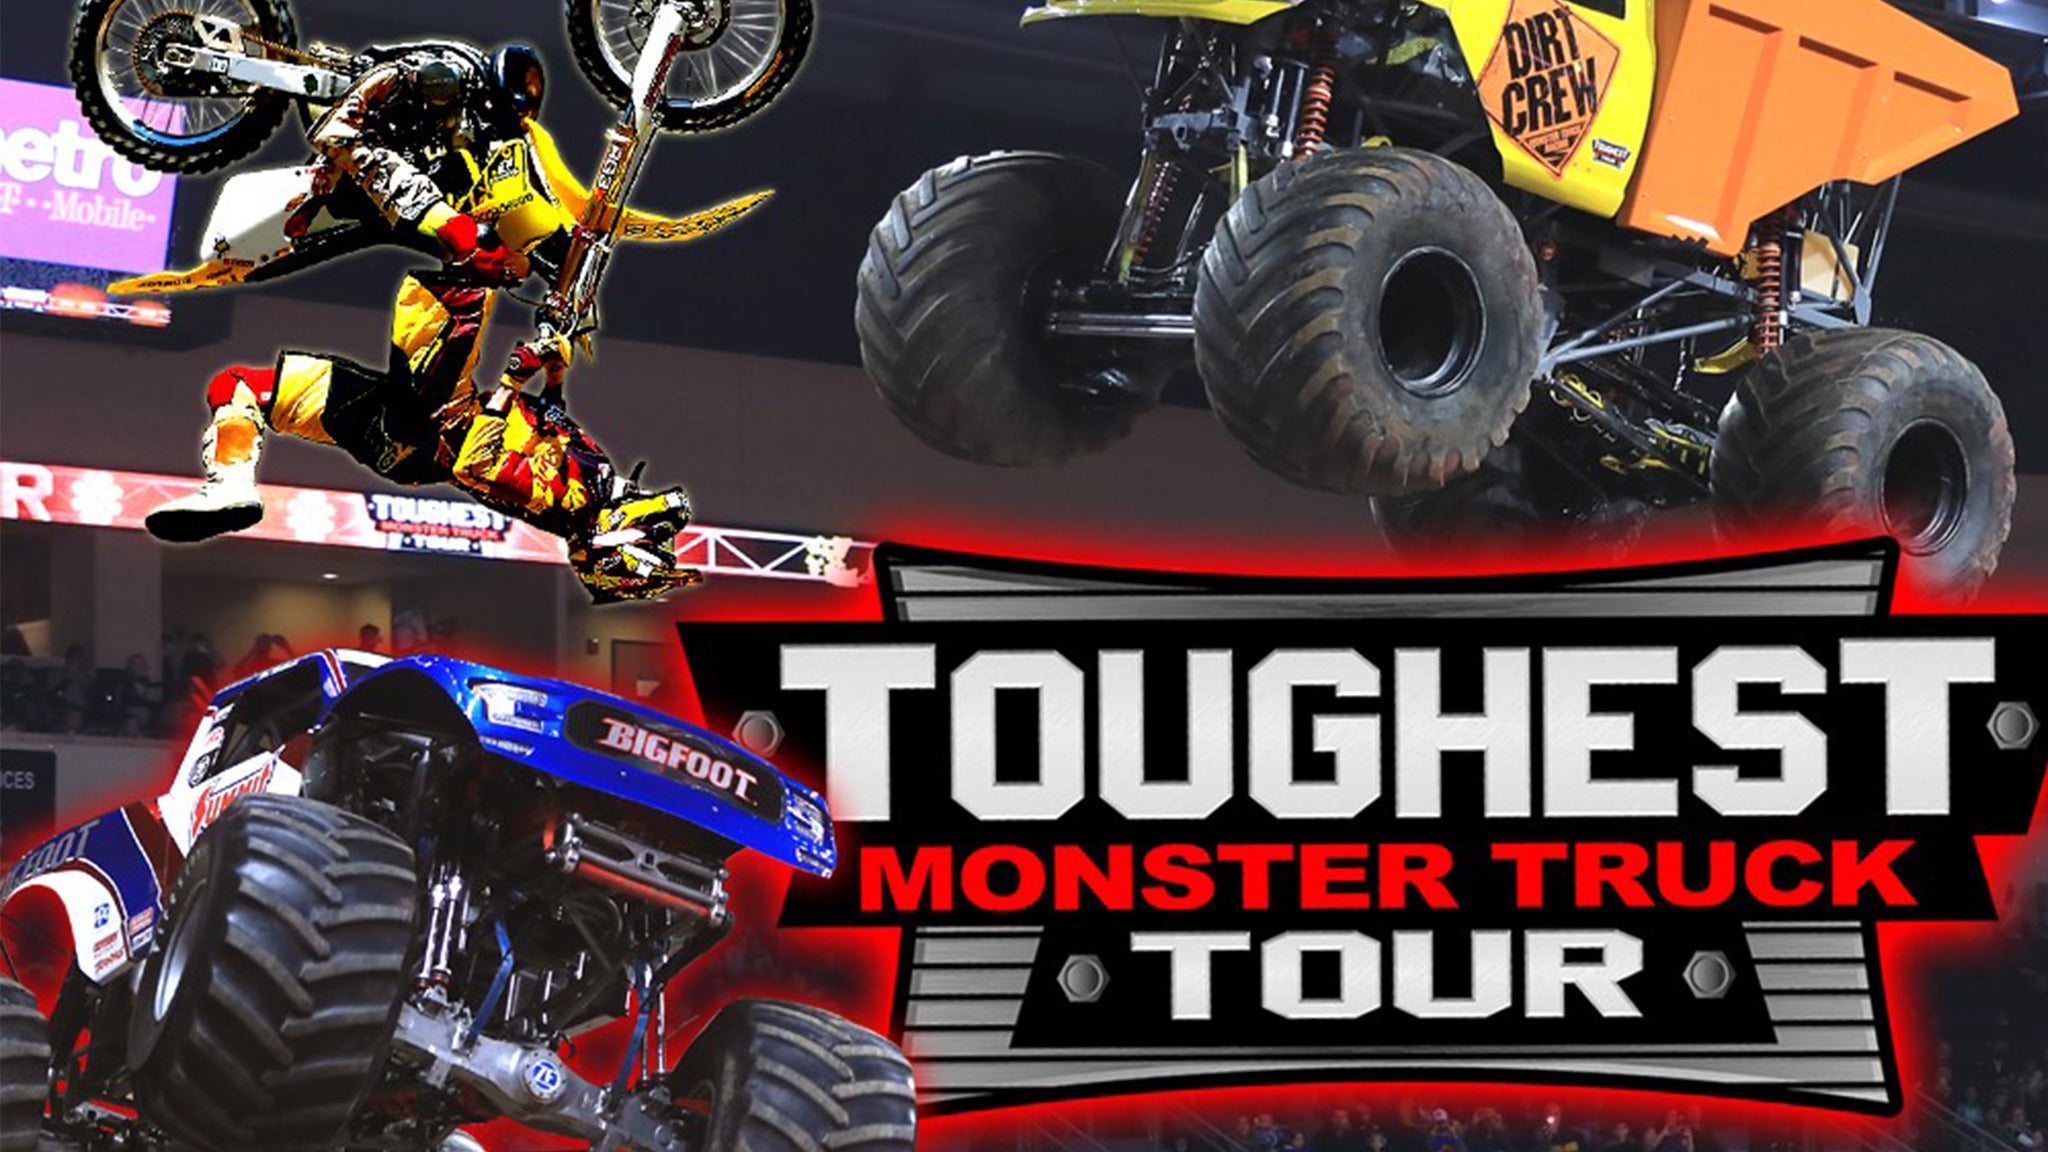 Toughest Monster Truck Tour - Championship Weekend presale passcode